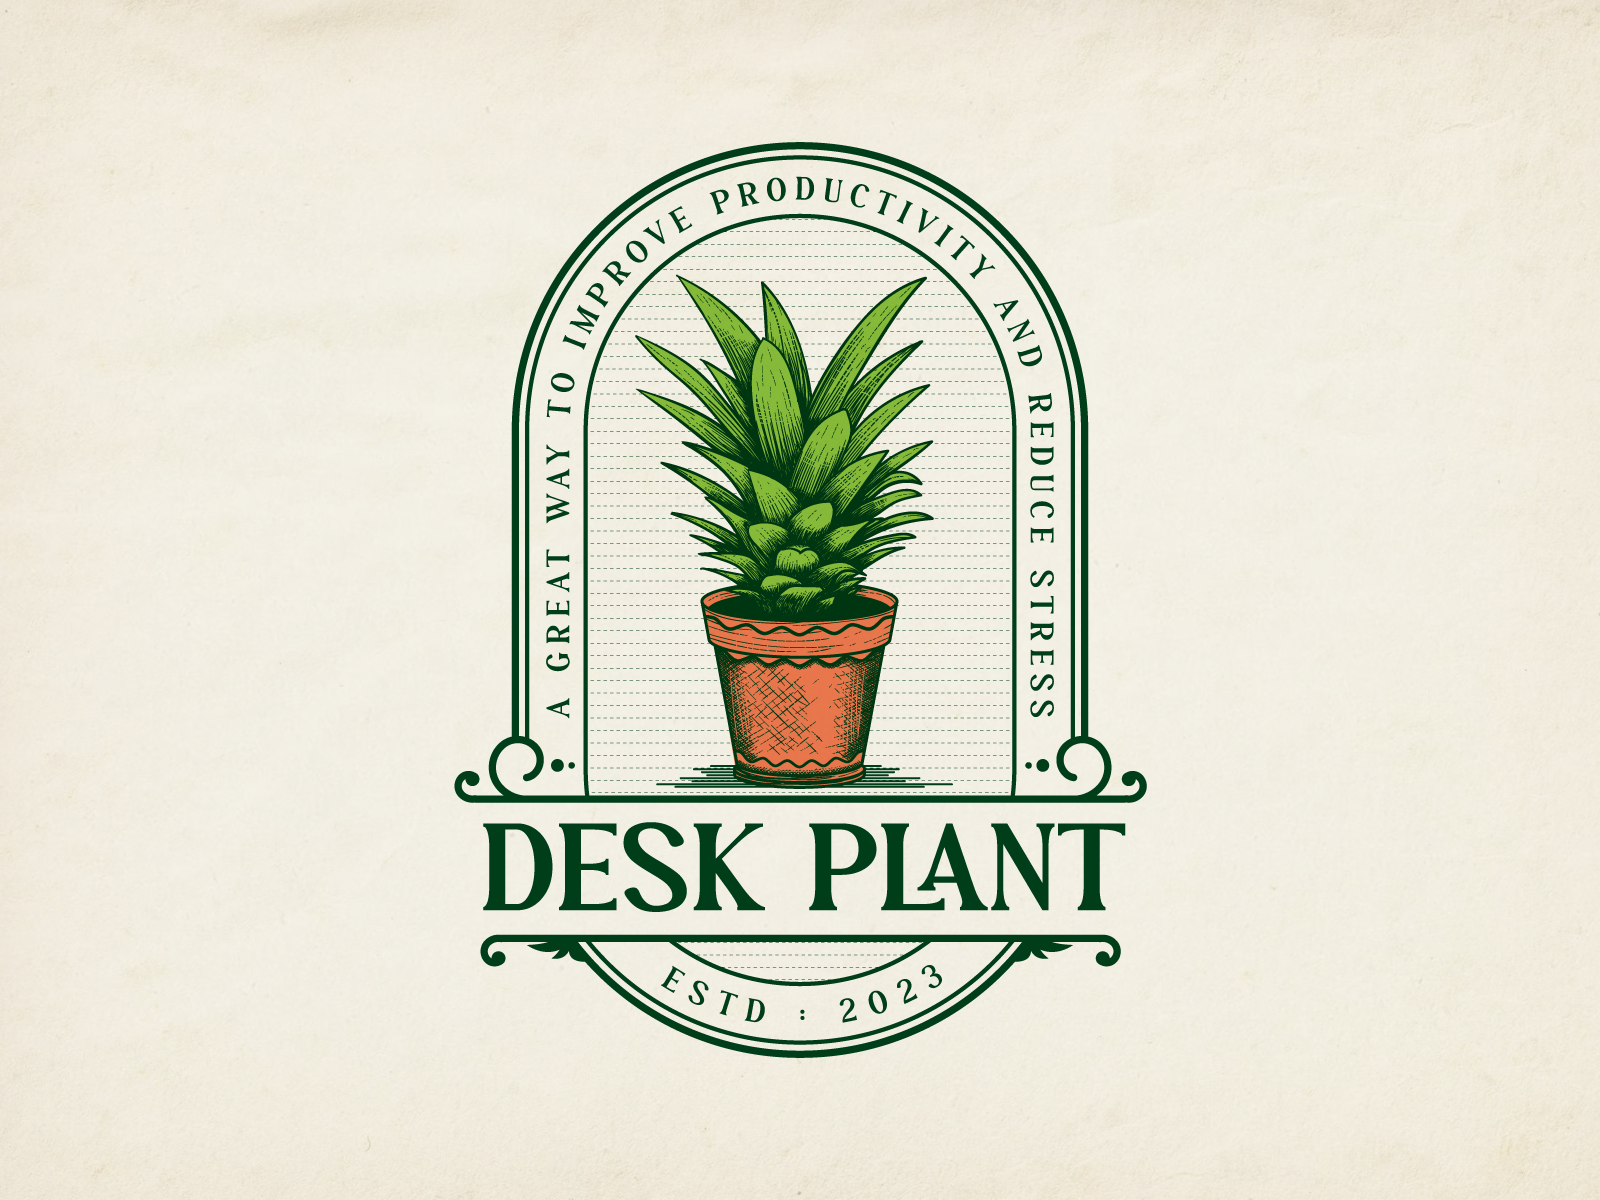 Certified plant-based' logo may have broader appeal than vegan stamp, says  PBFA